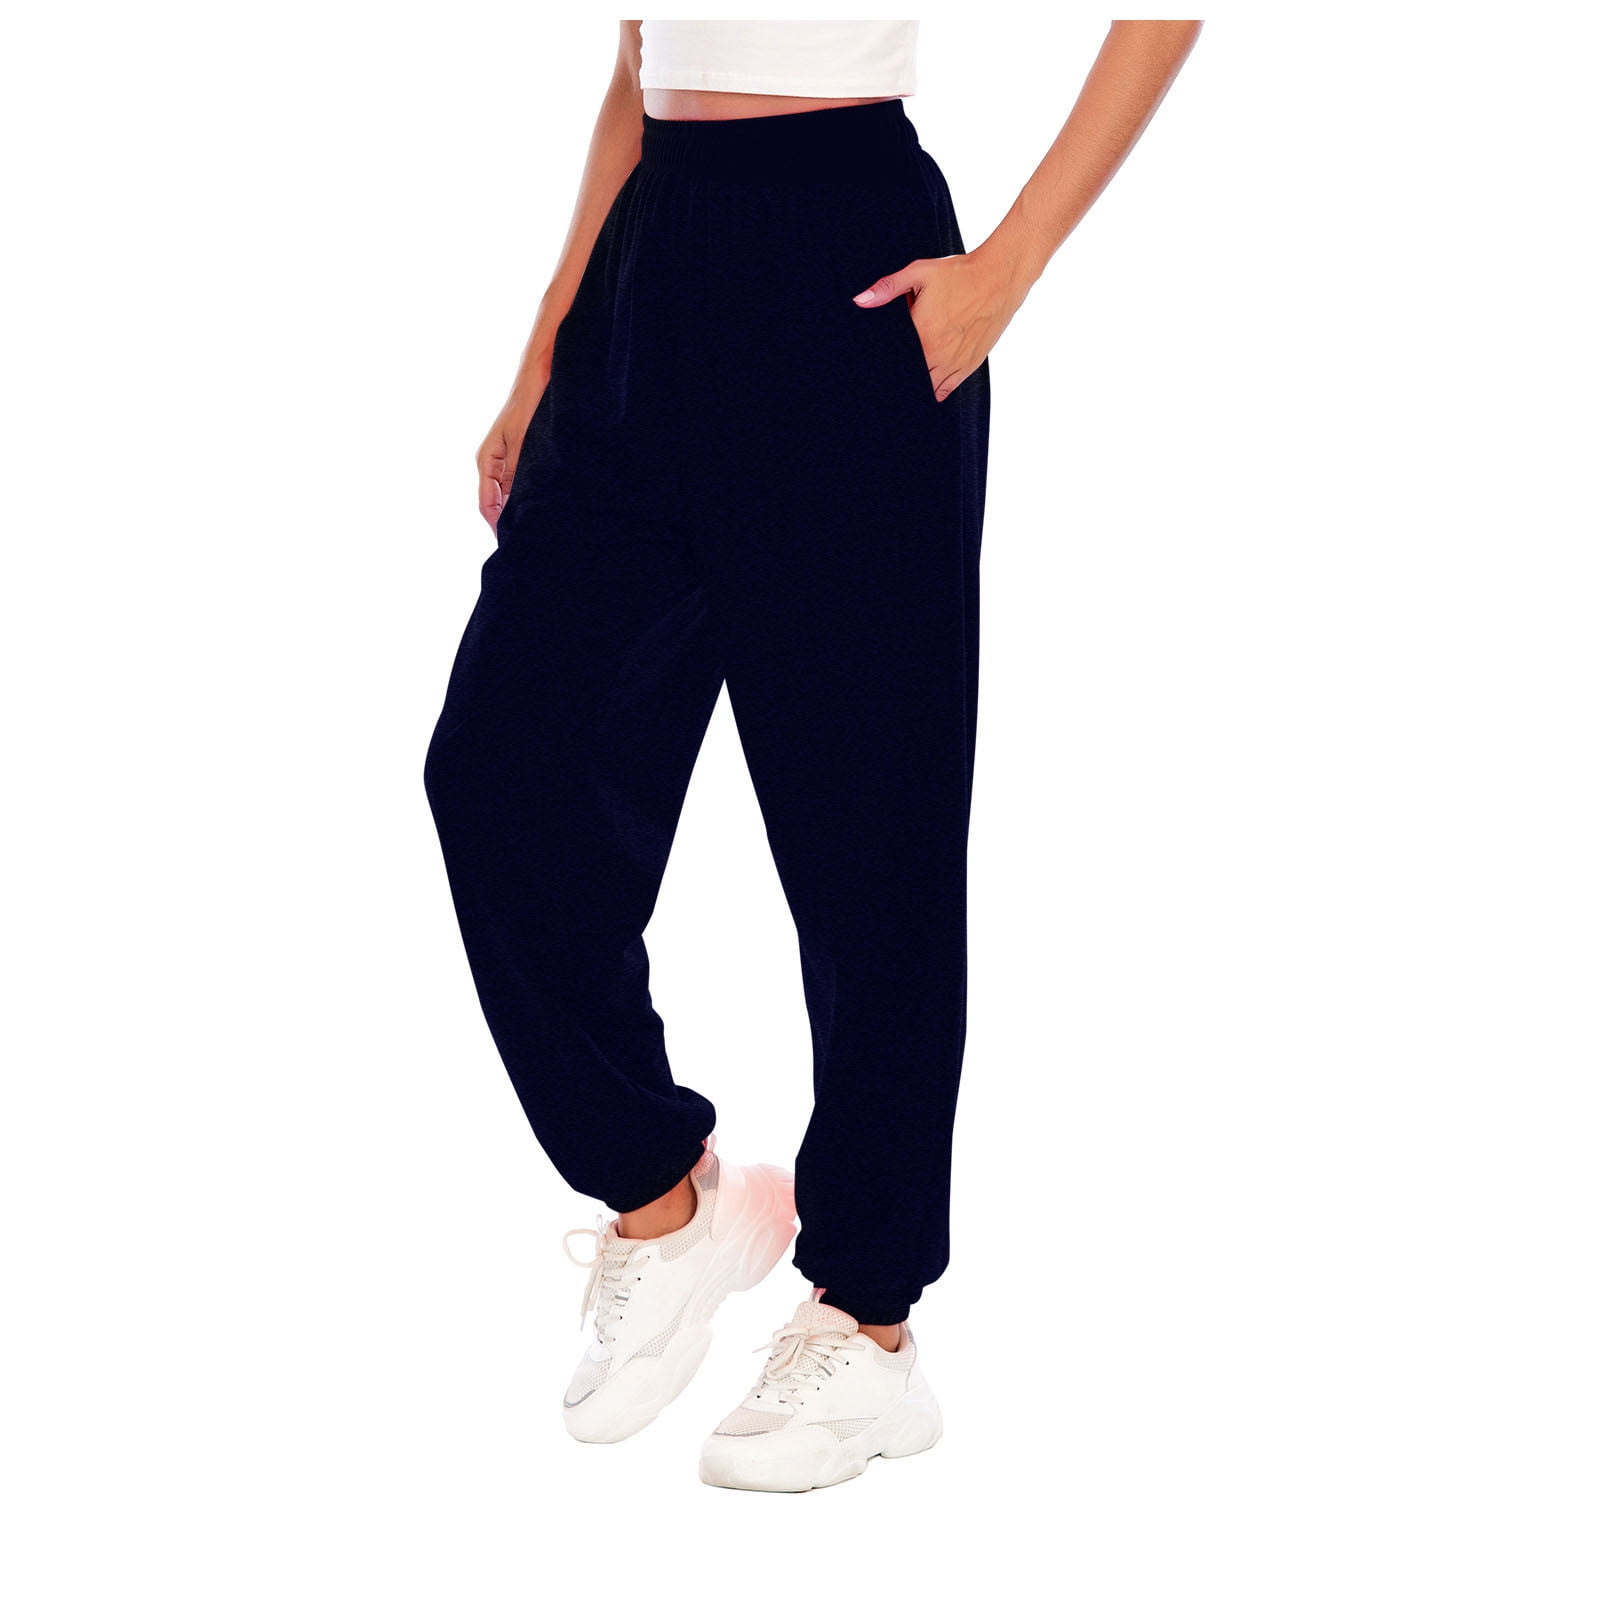 Loose Fitting Pants for Women Dressy Casual Women Sports Pants Trousers  Jogging Sweatpants Jogger Pants 